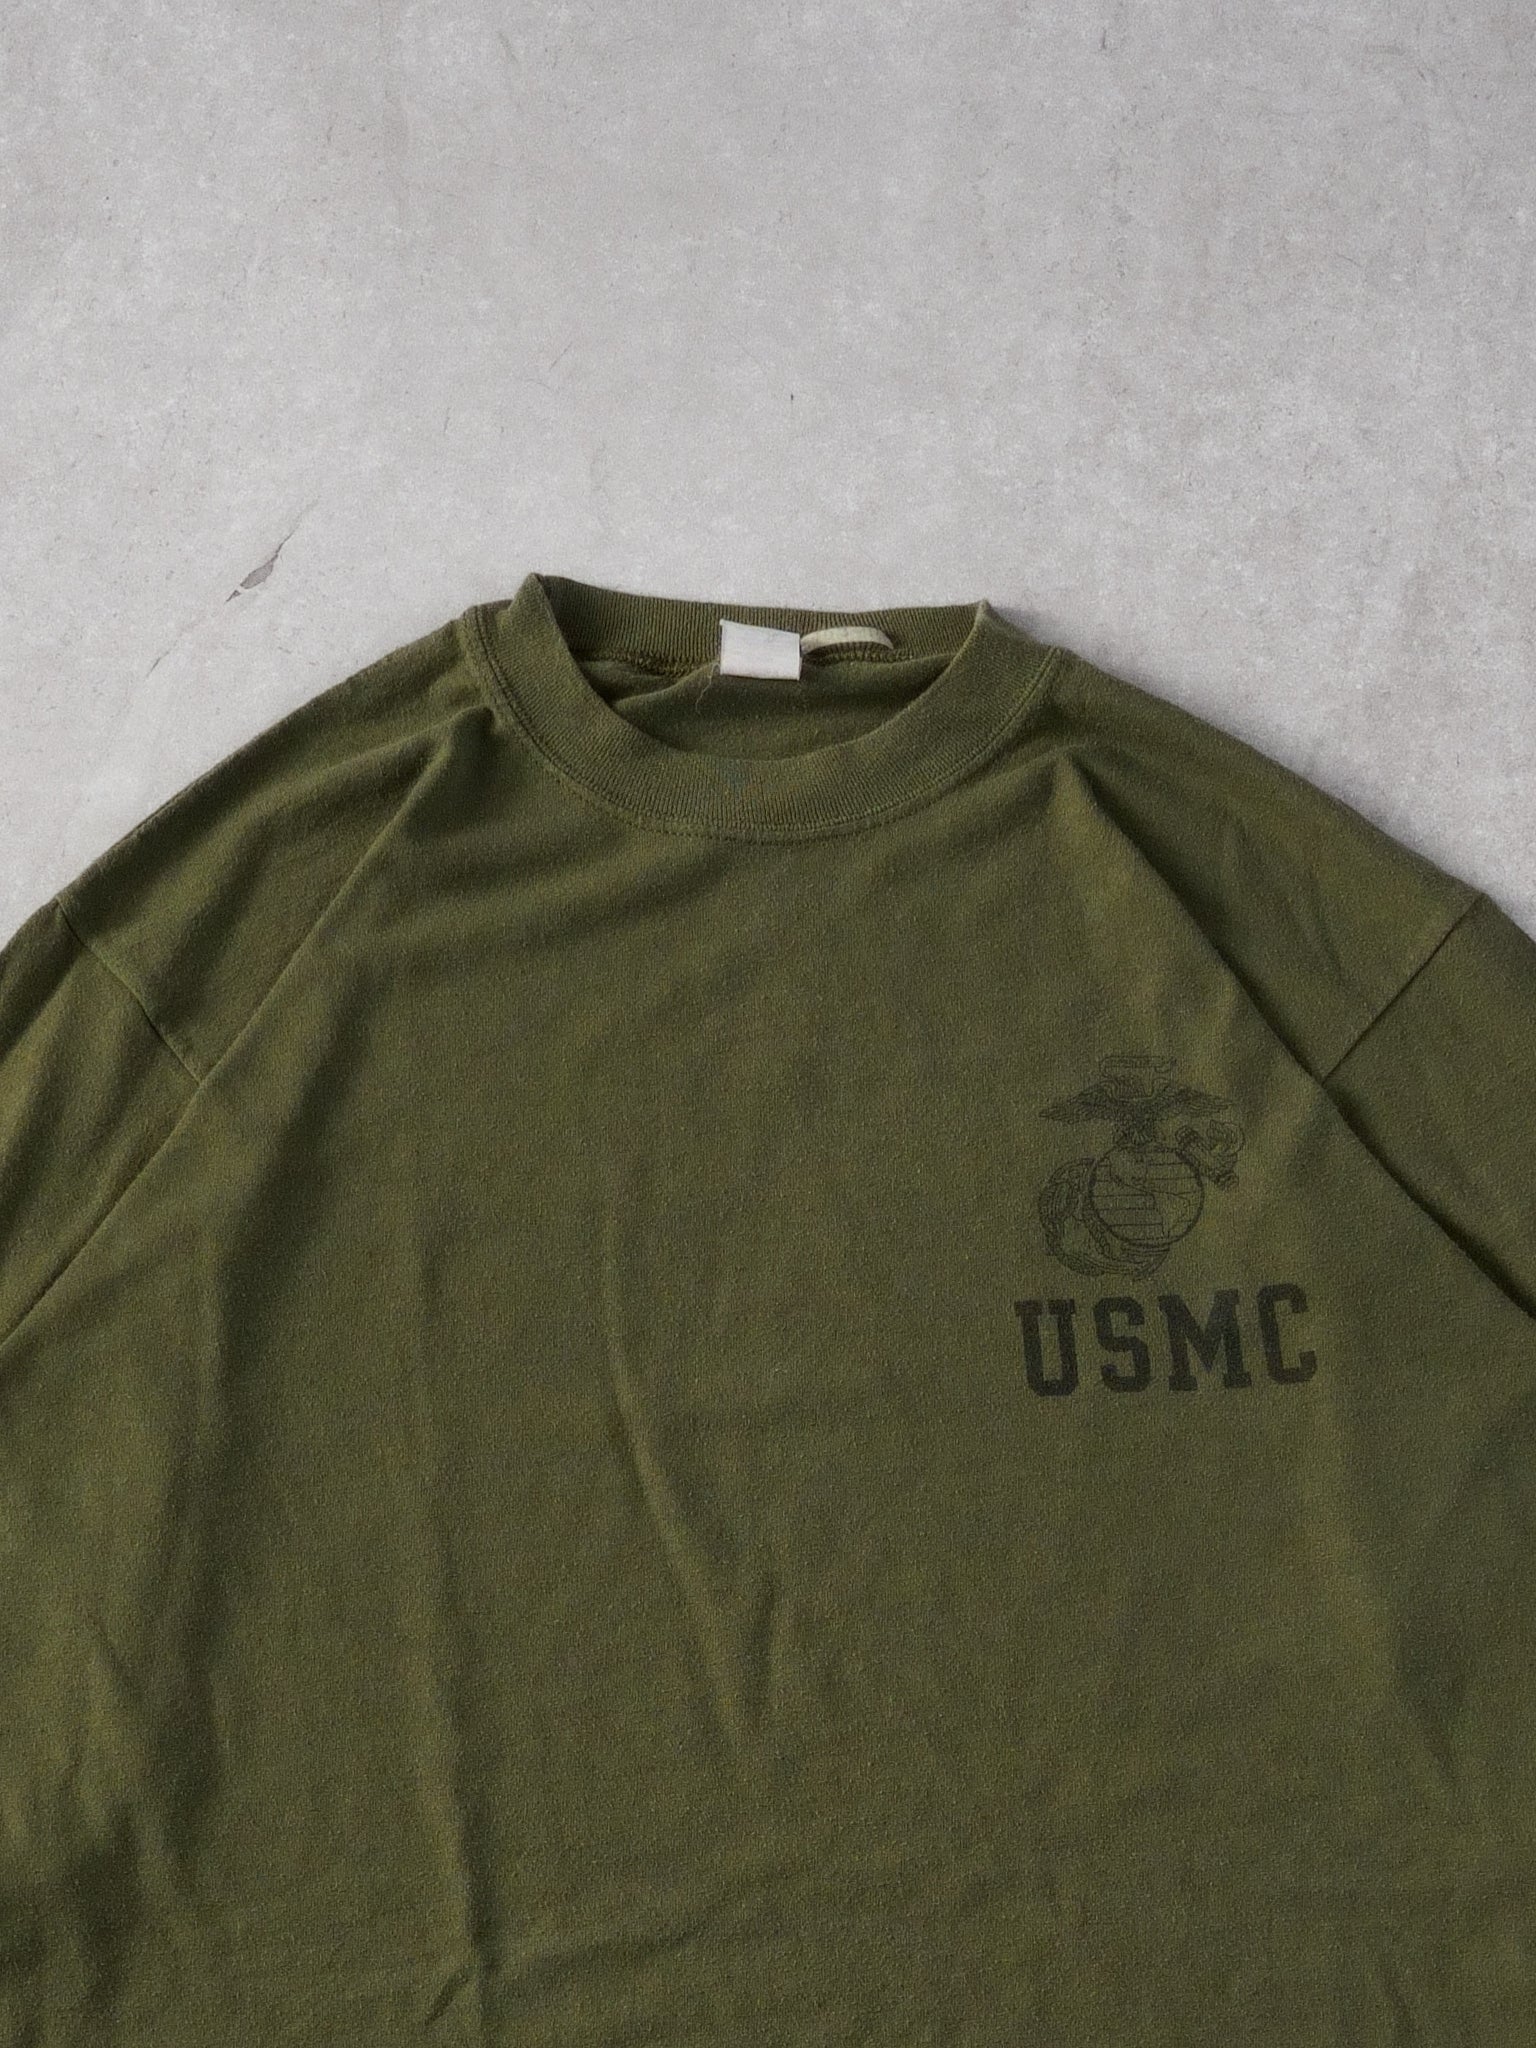 Vintage Sage Green United States Marine Core Longsleeve (S)